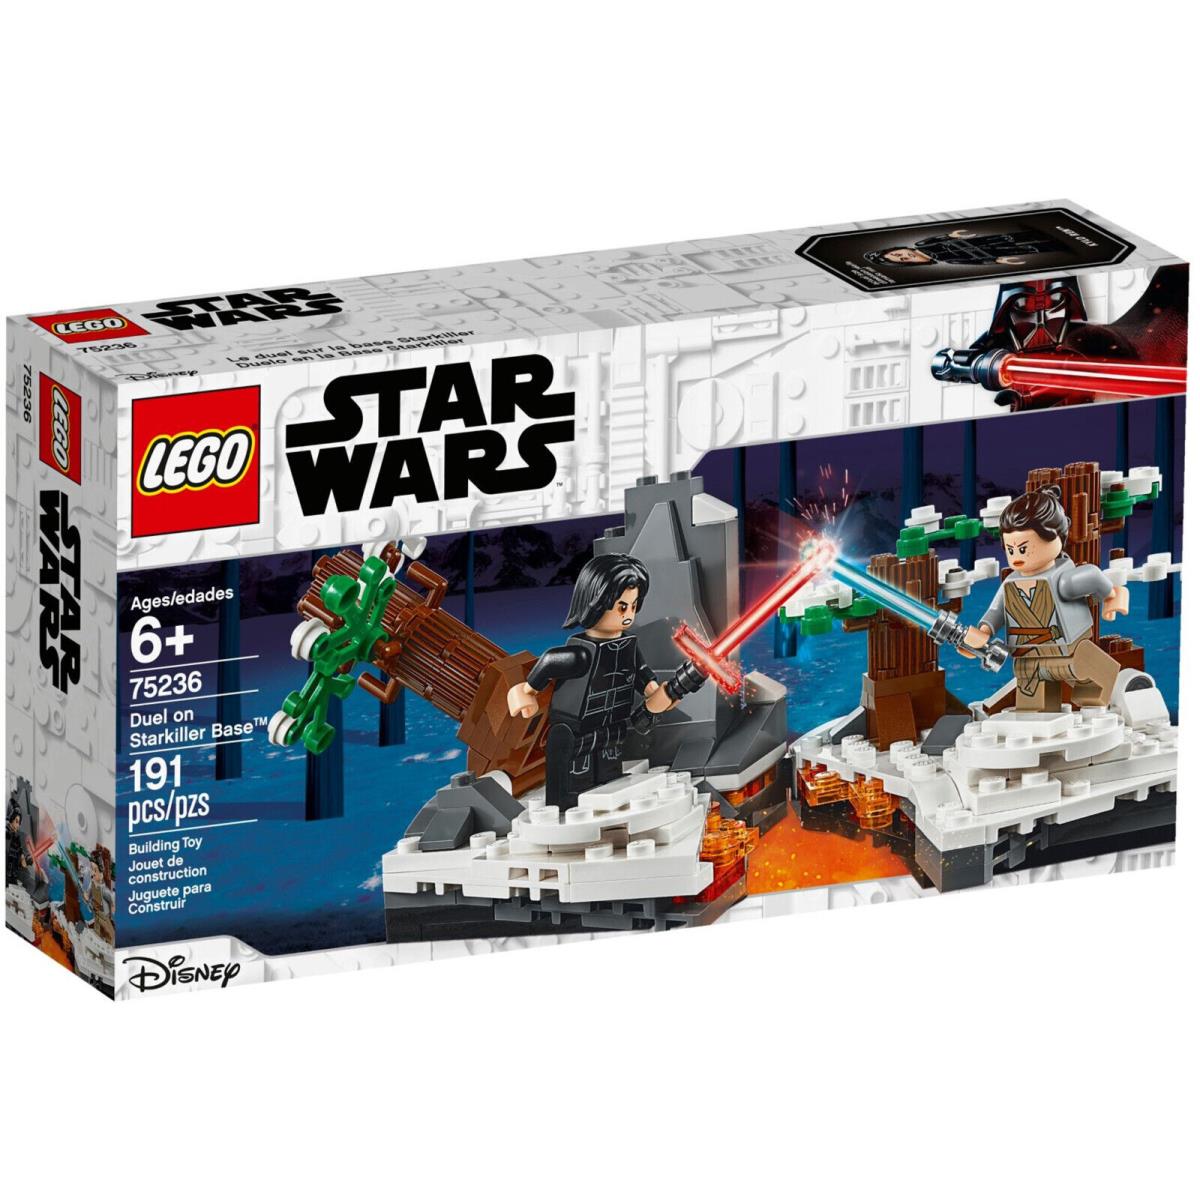 Lego Duel ON Starkiller Base 75236 Set Box sw1006 sw0677 Minifigs